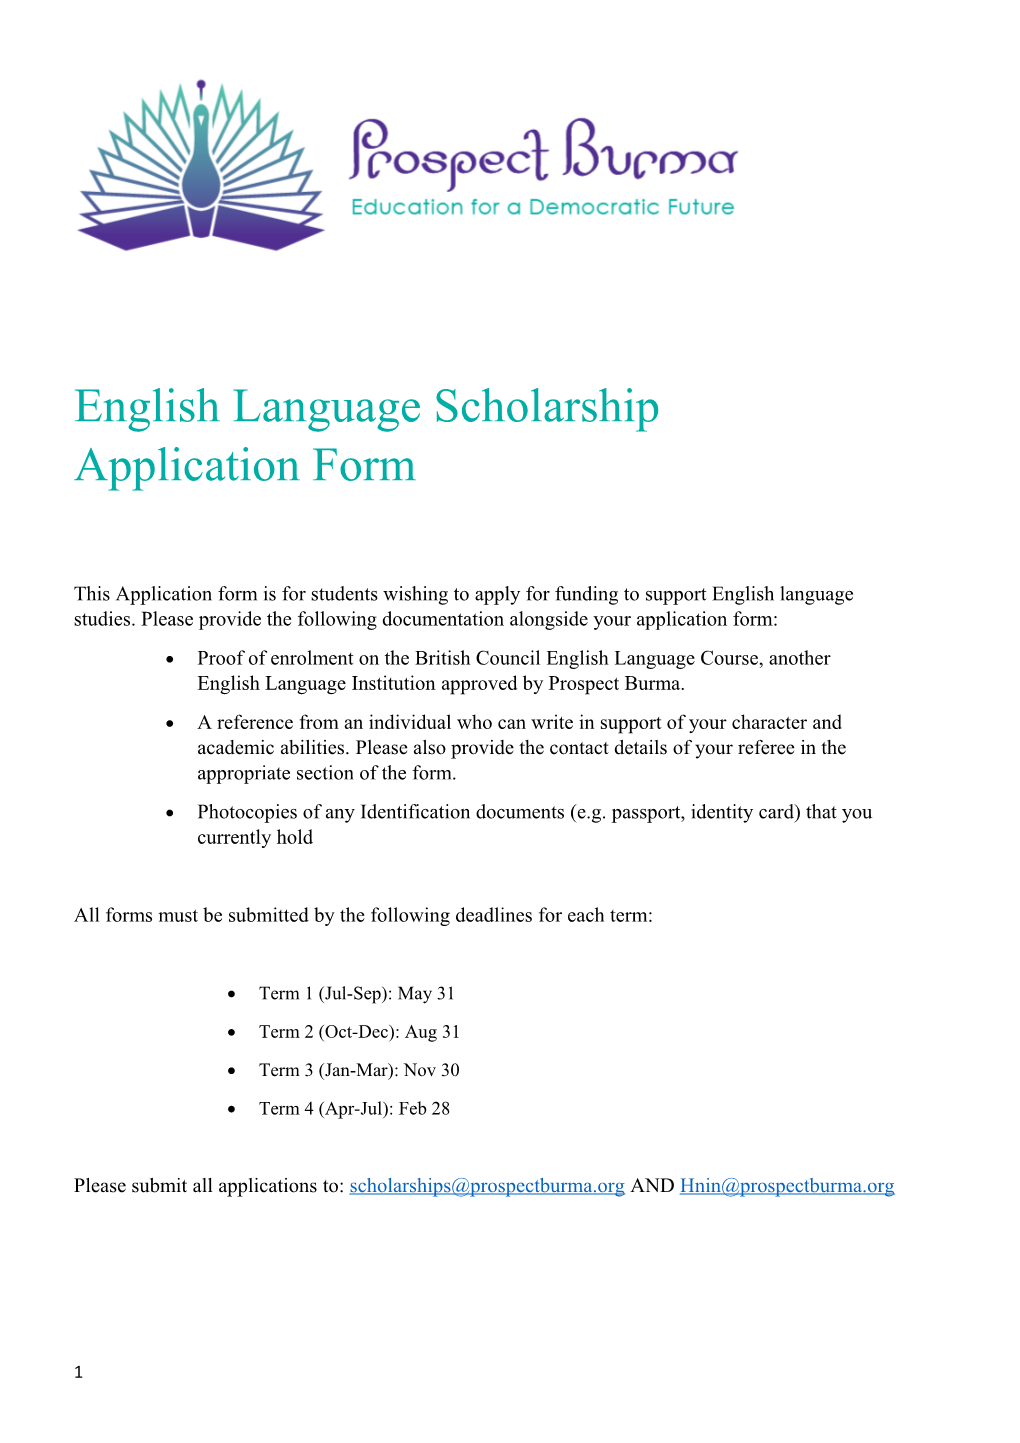 English Language Scholarship Application Form